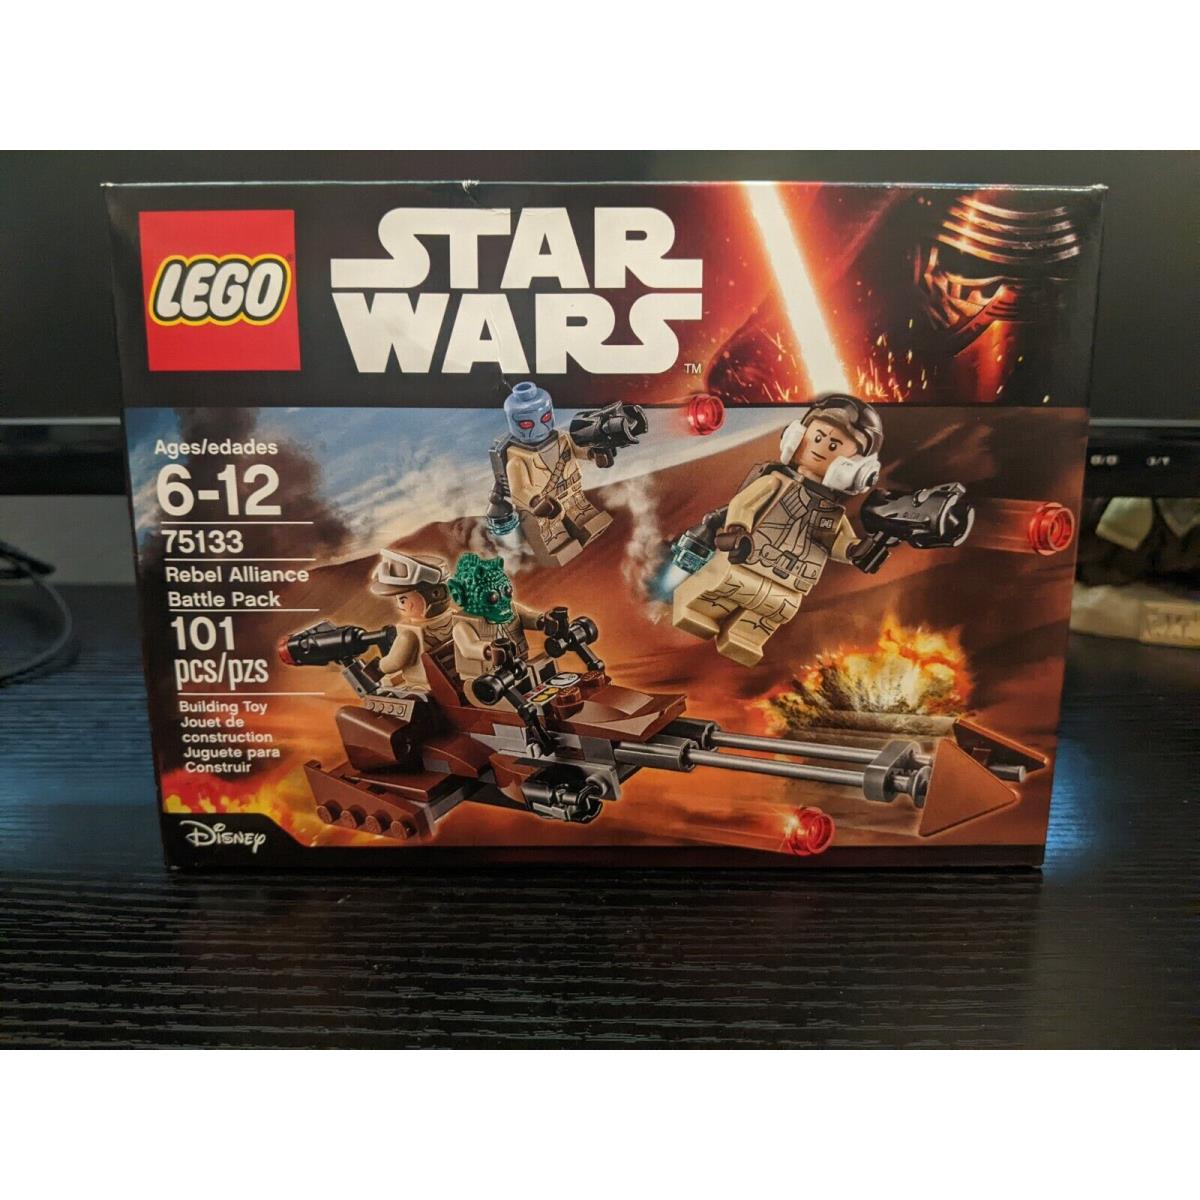 Misb Lego Star Wars Rebel Alliance Battle Pack 75133 Retired Set